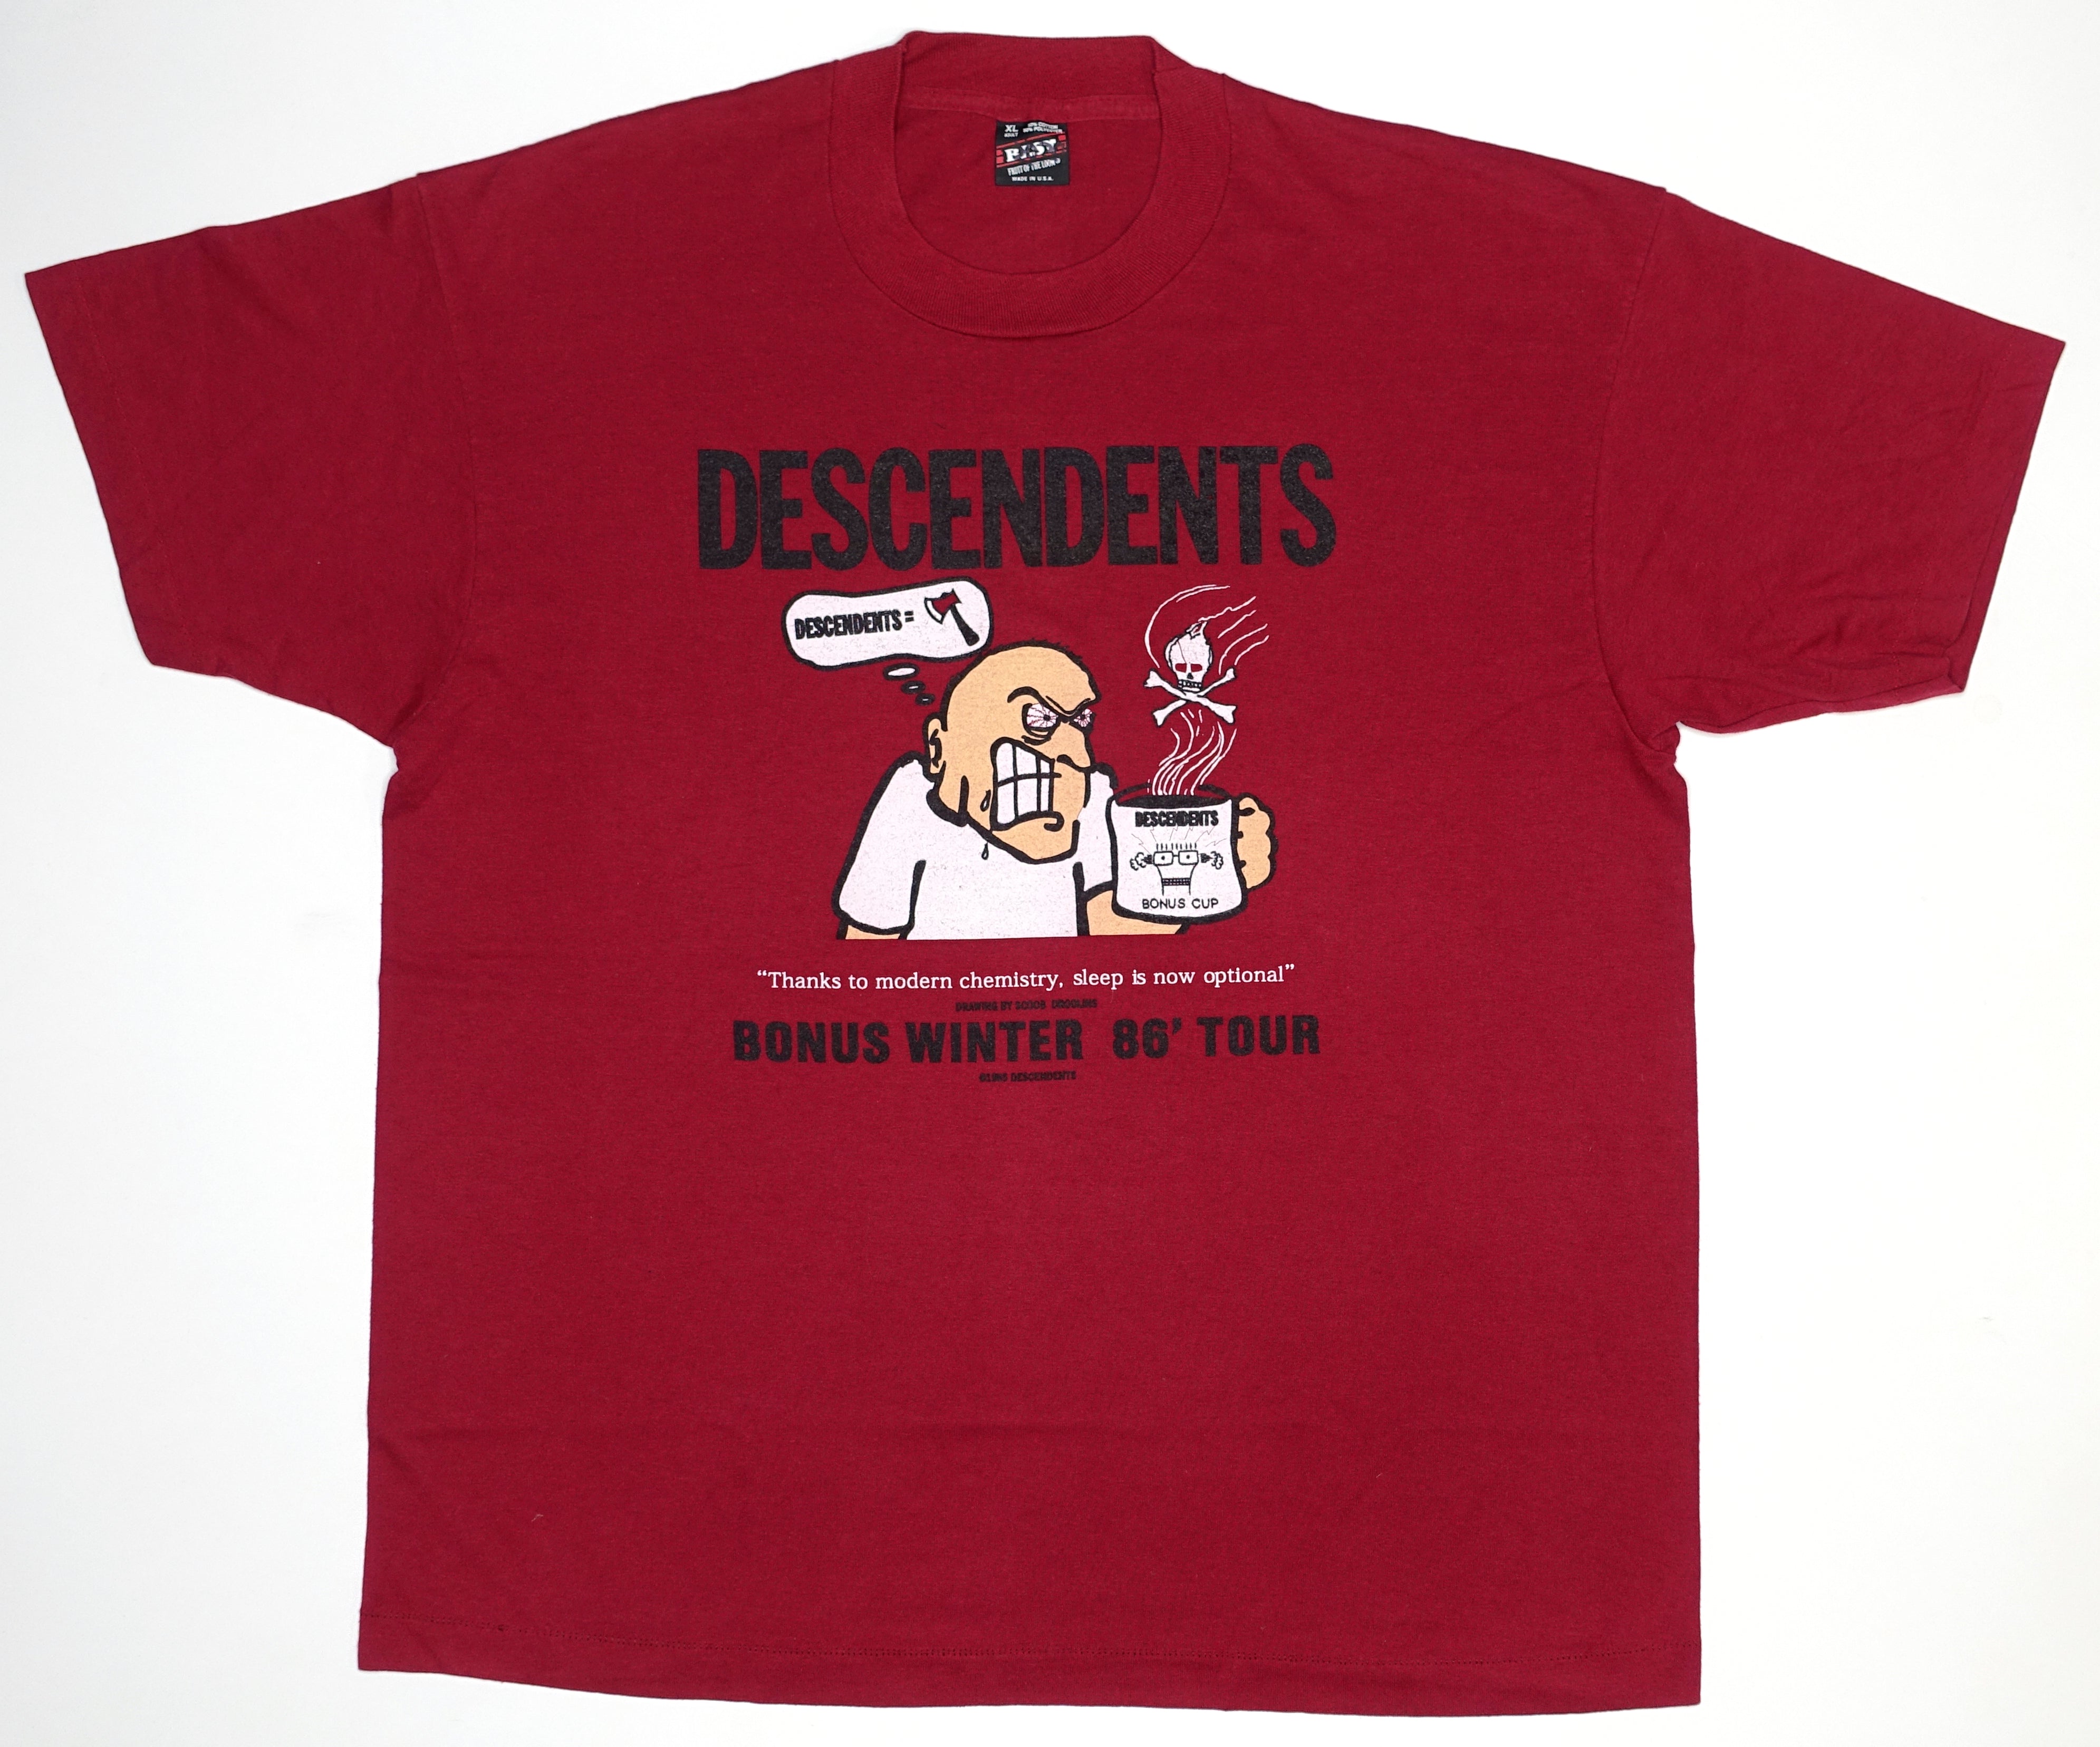 Descendents - Bonus Cup Bootleg Tour Shirt Size XL